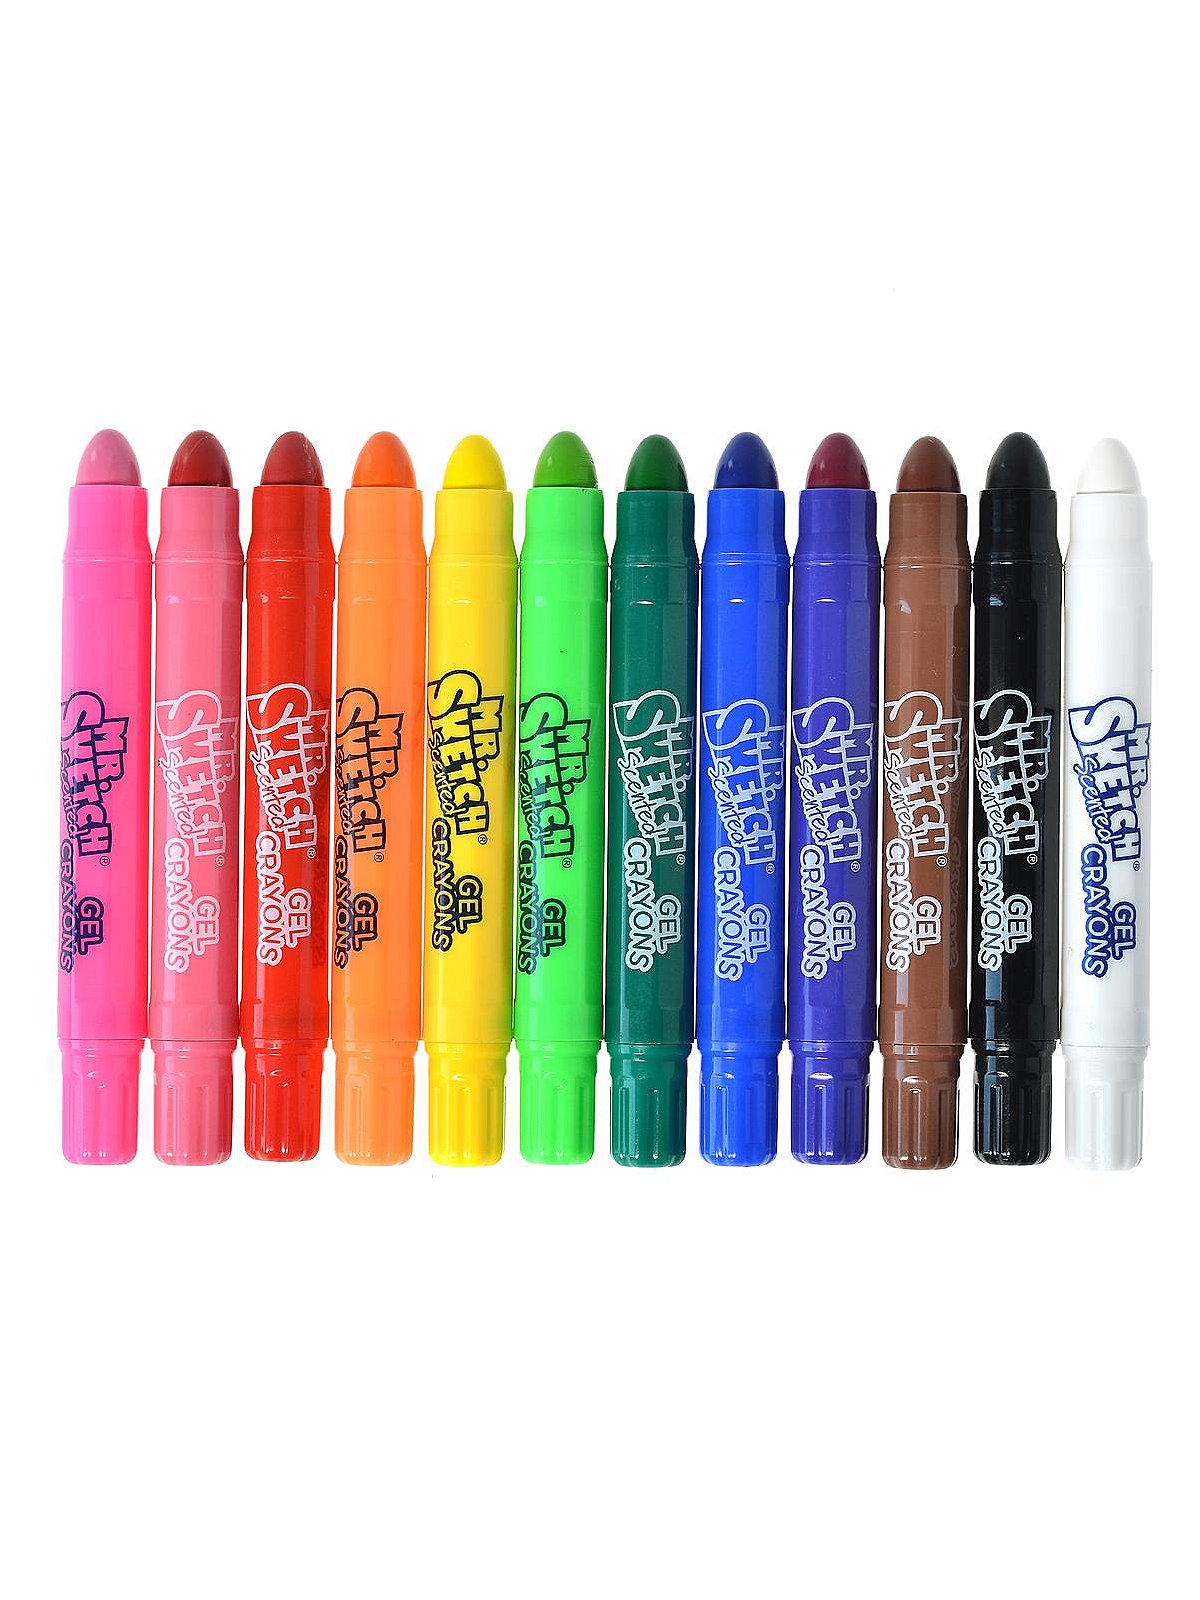 Mr. Sketch Scented Twistable Gel Crayons - 6 Color Set